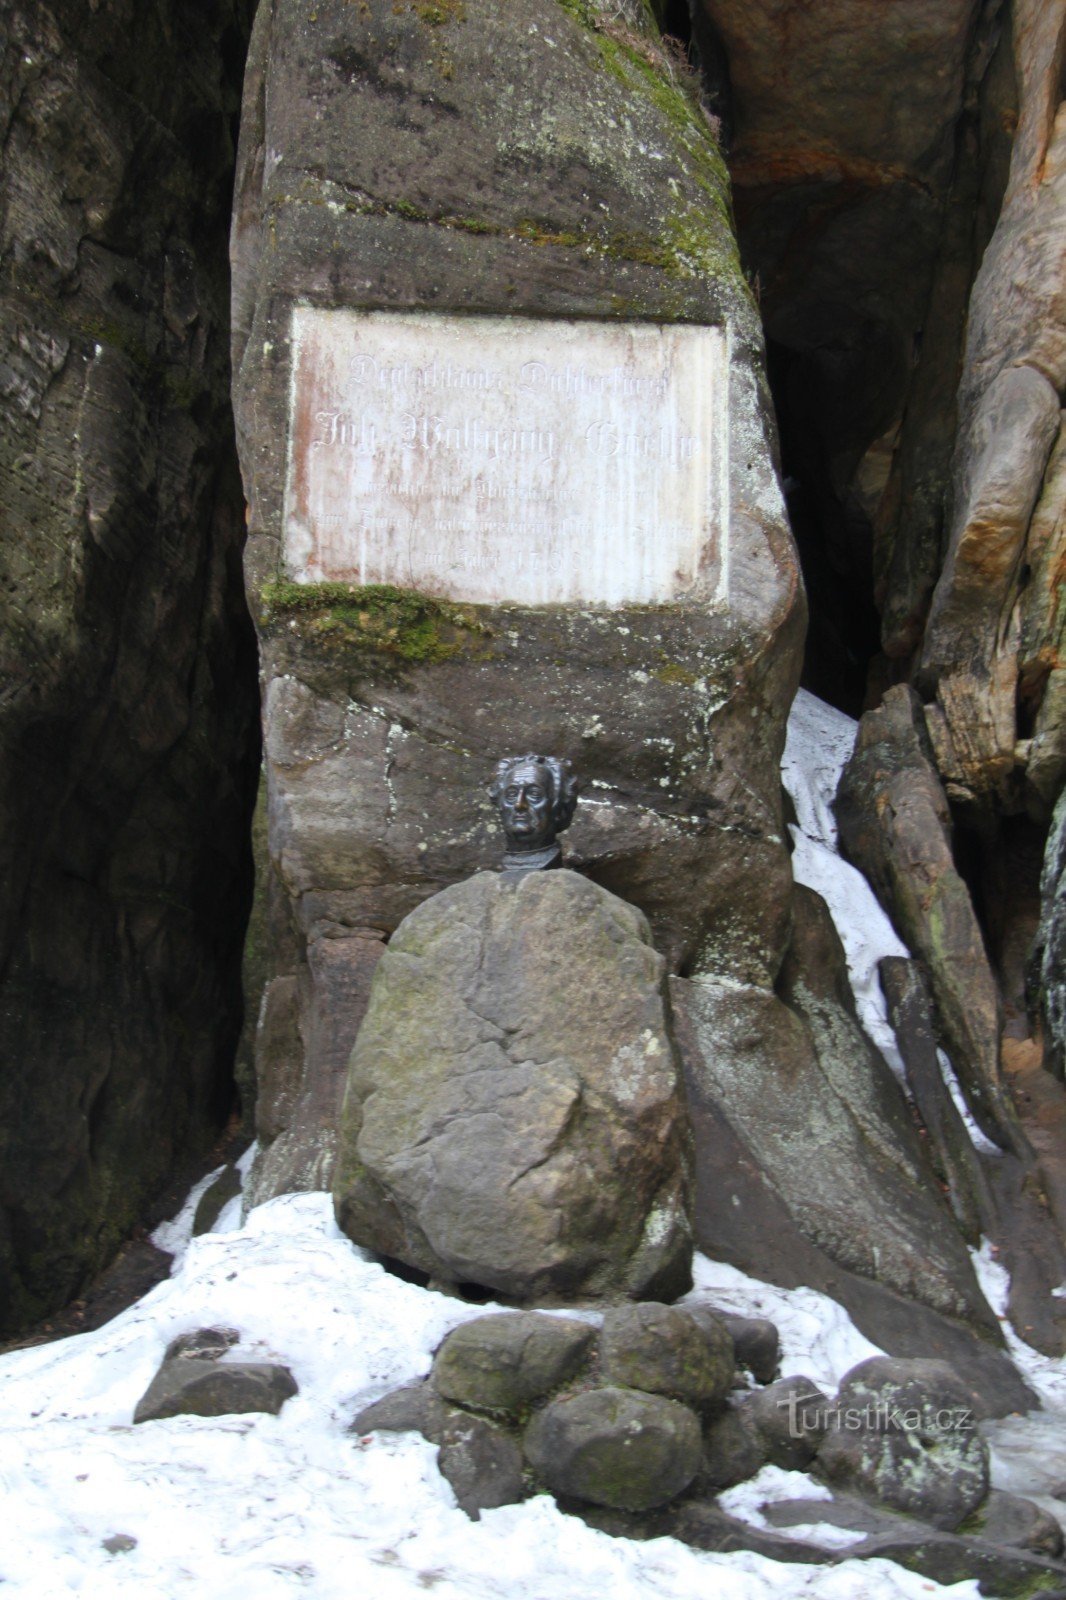 Monument to JWGoethe in Adršpach - Goethe's plaque